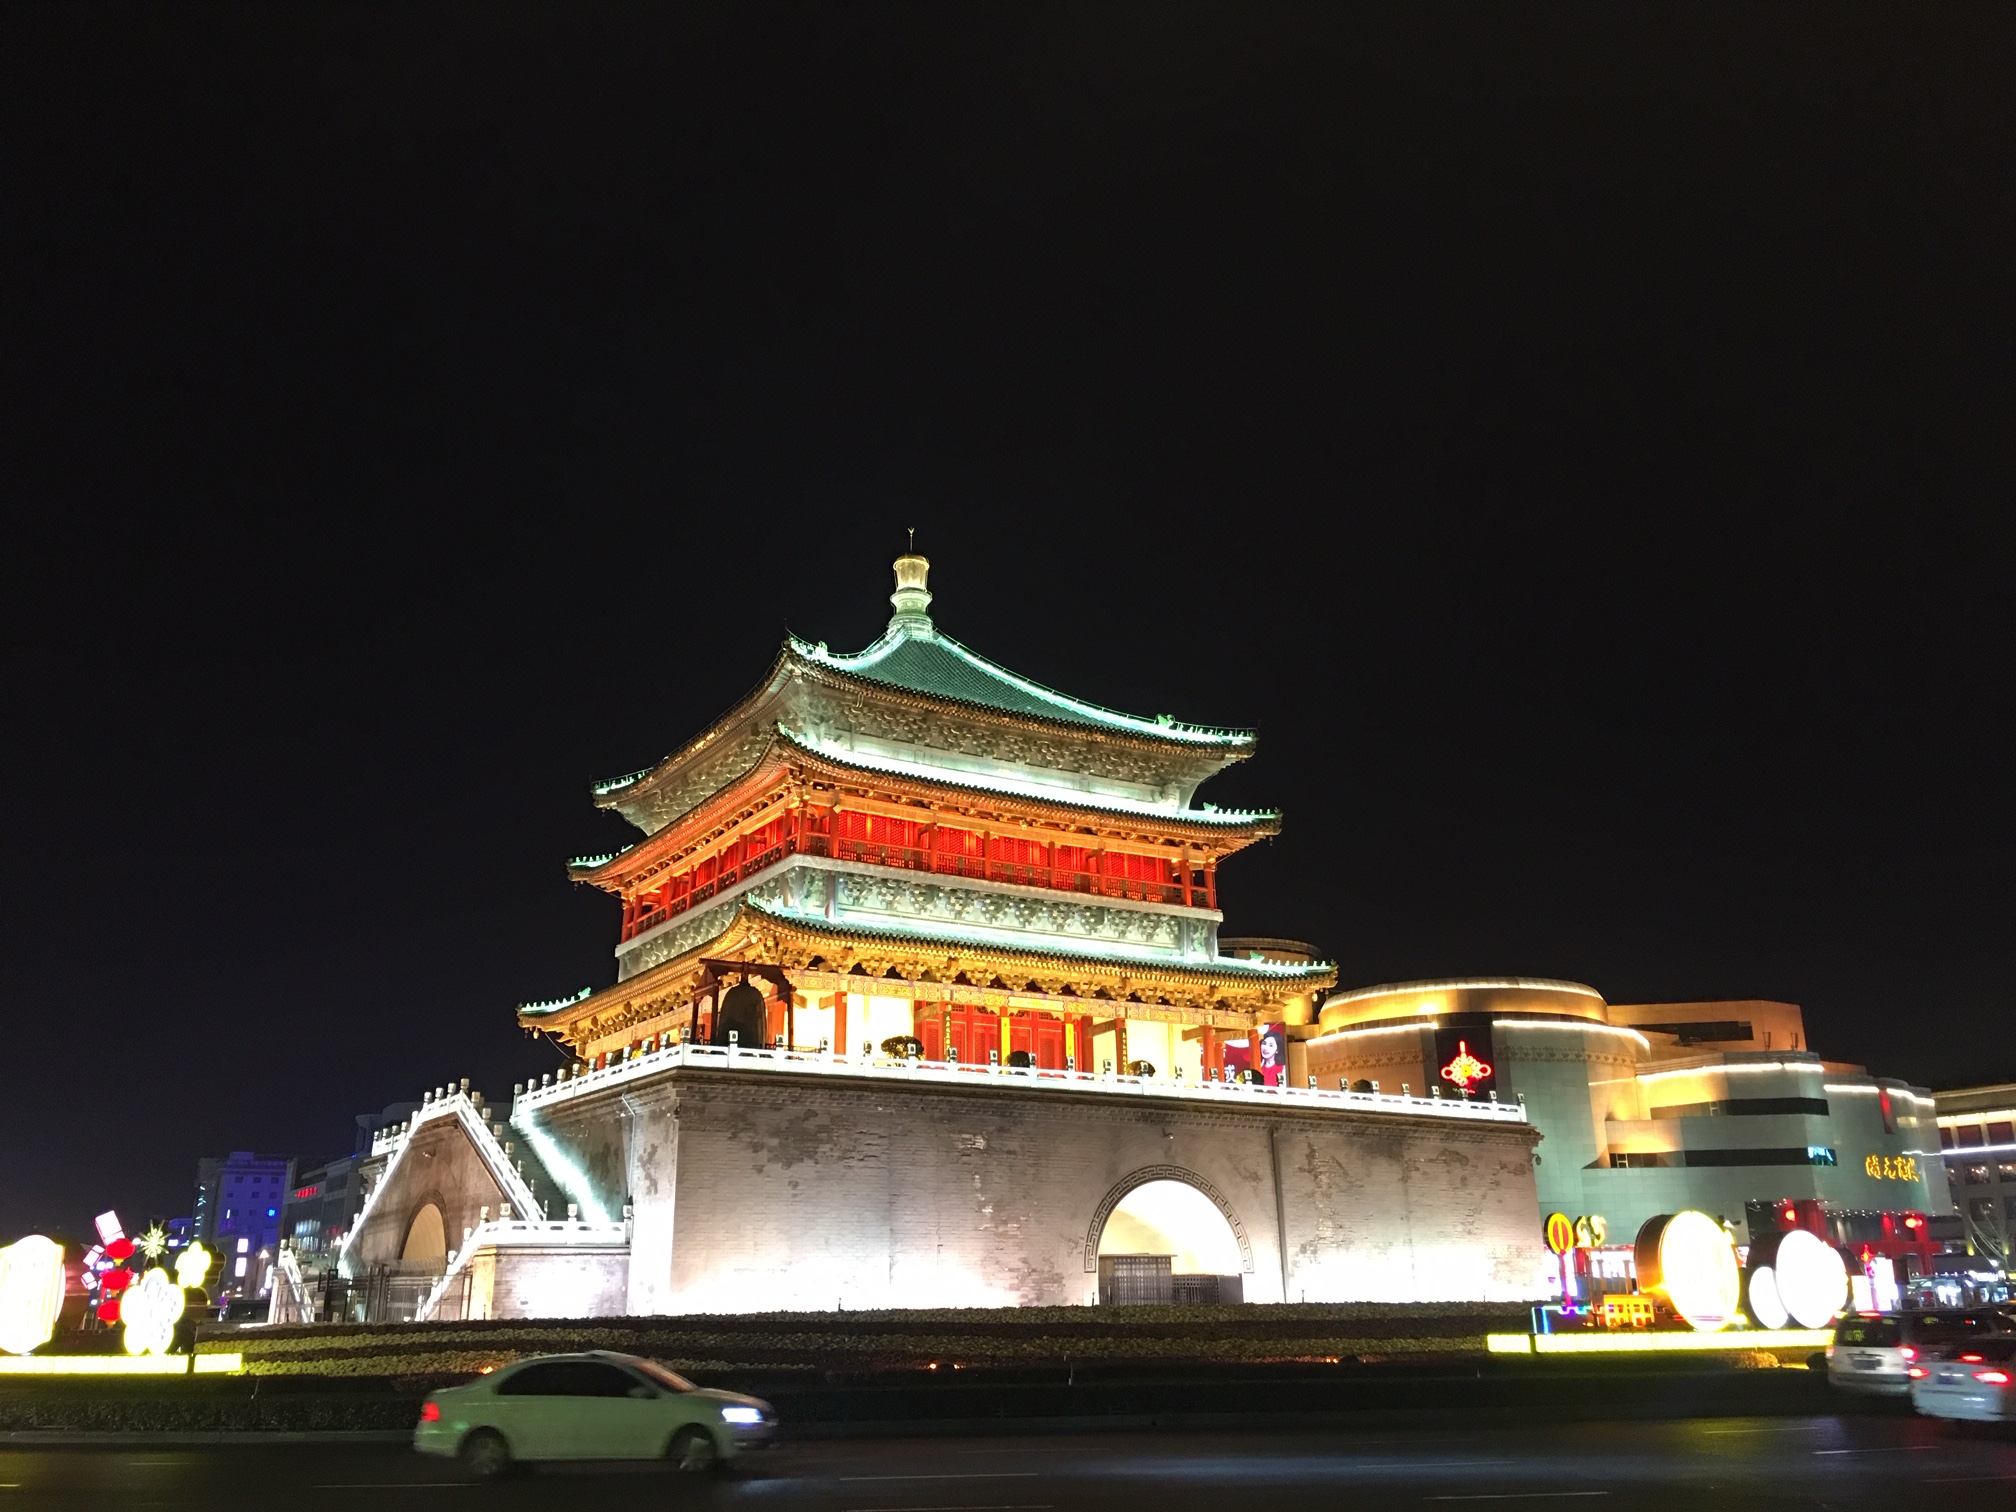 Illuminated Chinese Monument.